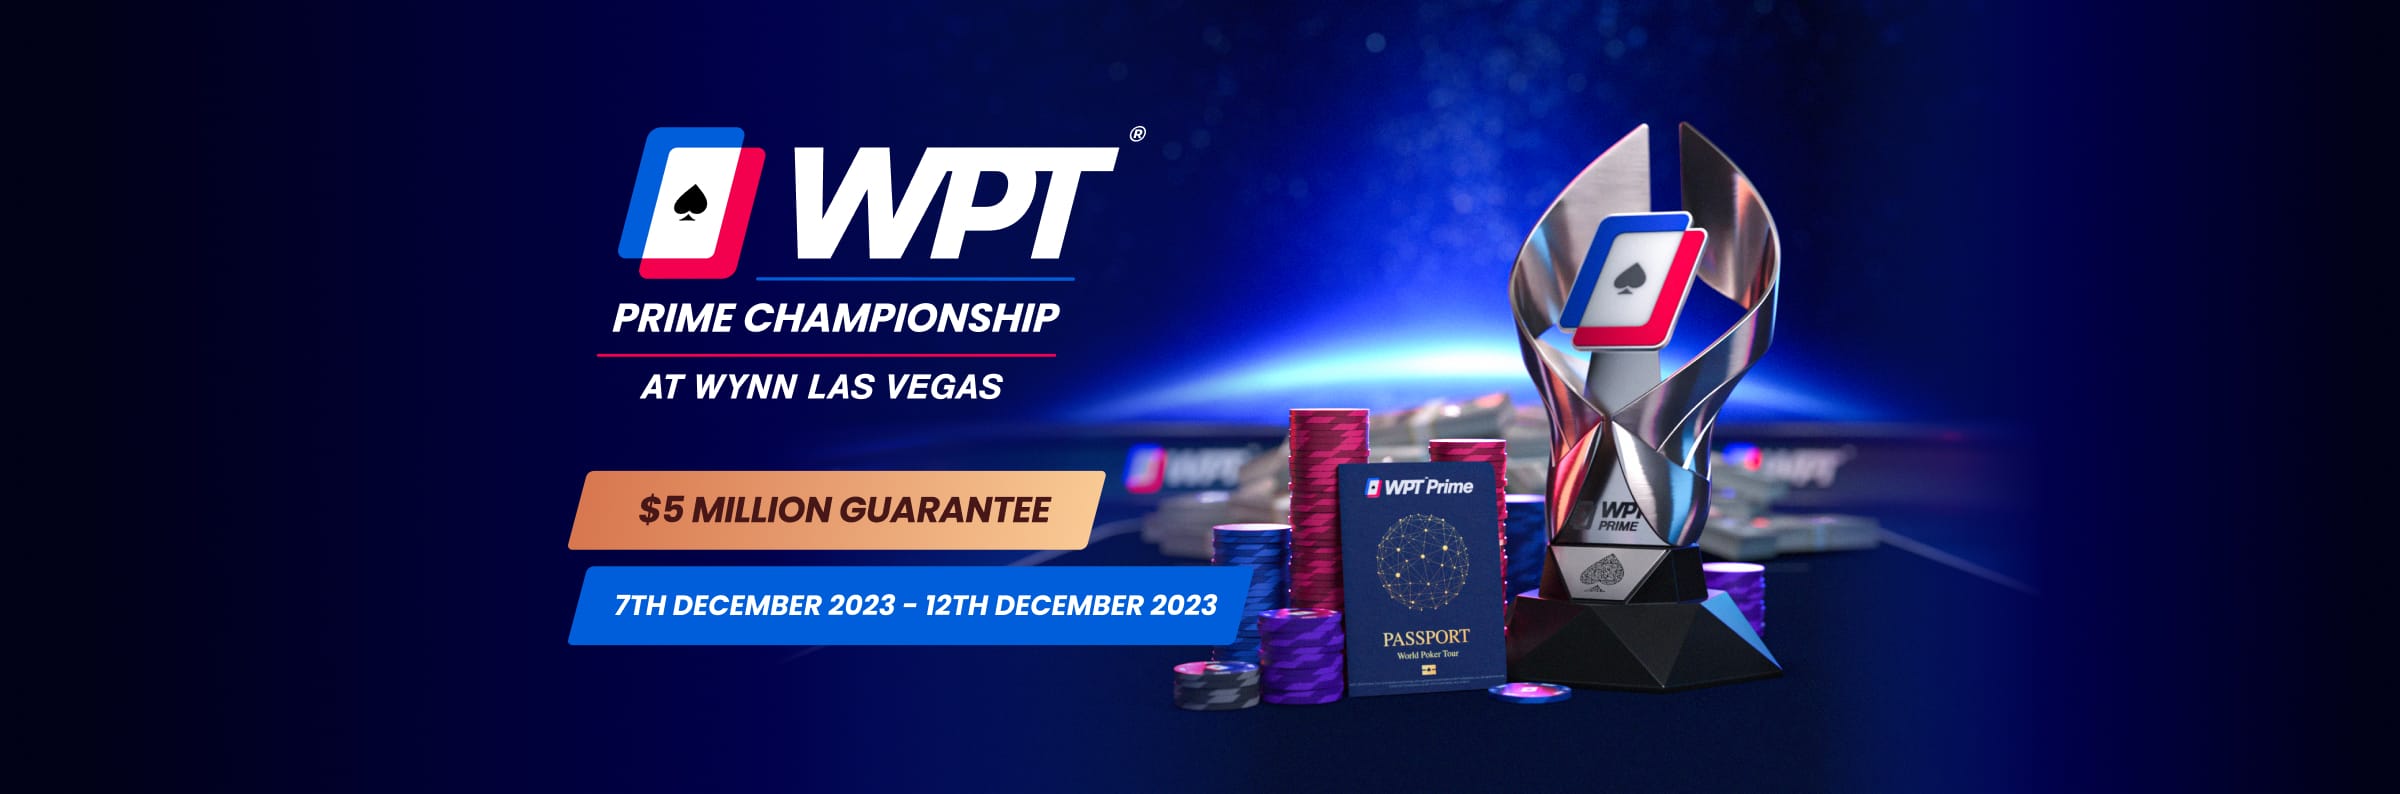 WPT Prime Championship at Wynn Las Vegas (5 Million GTD)